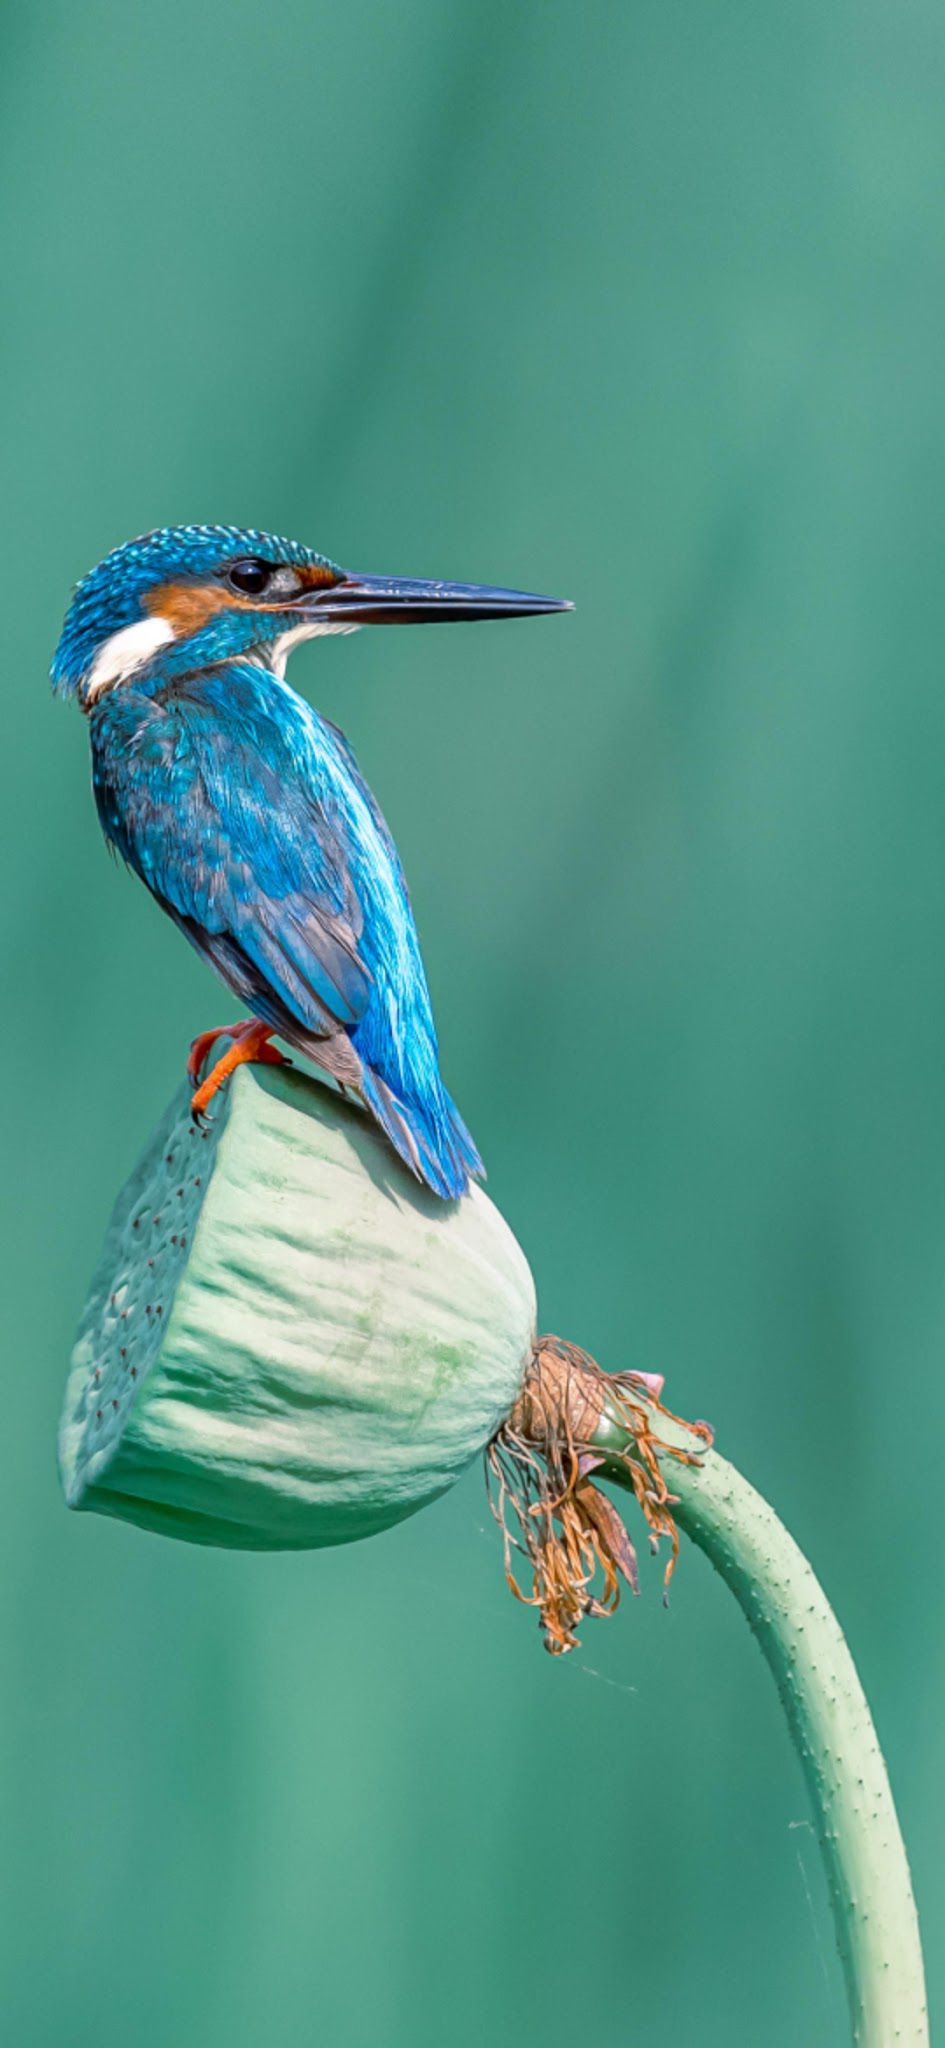  Kingfisher Bird Sanctuary